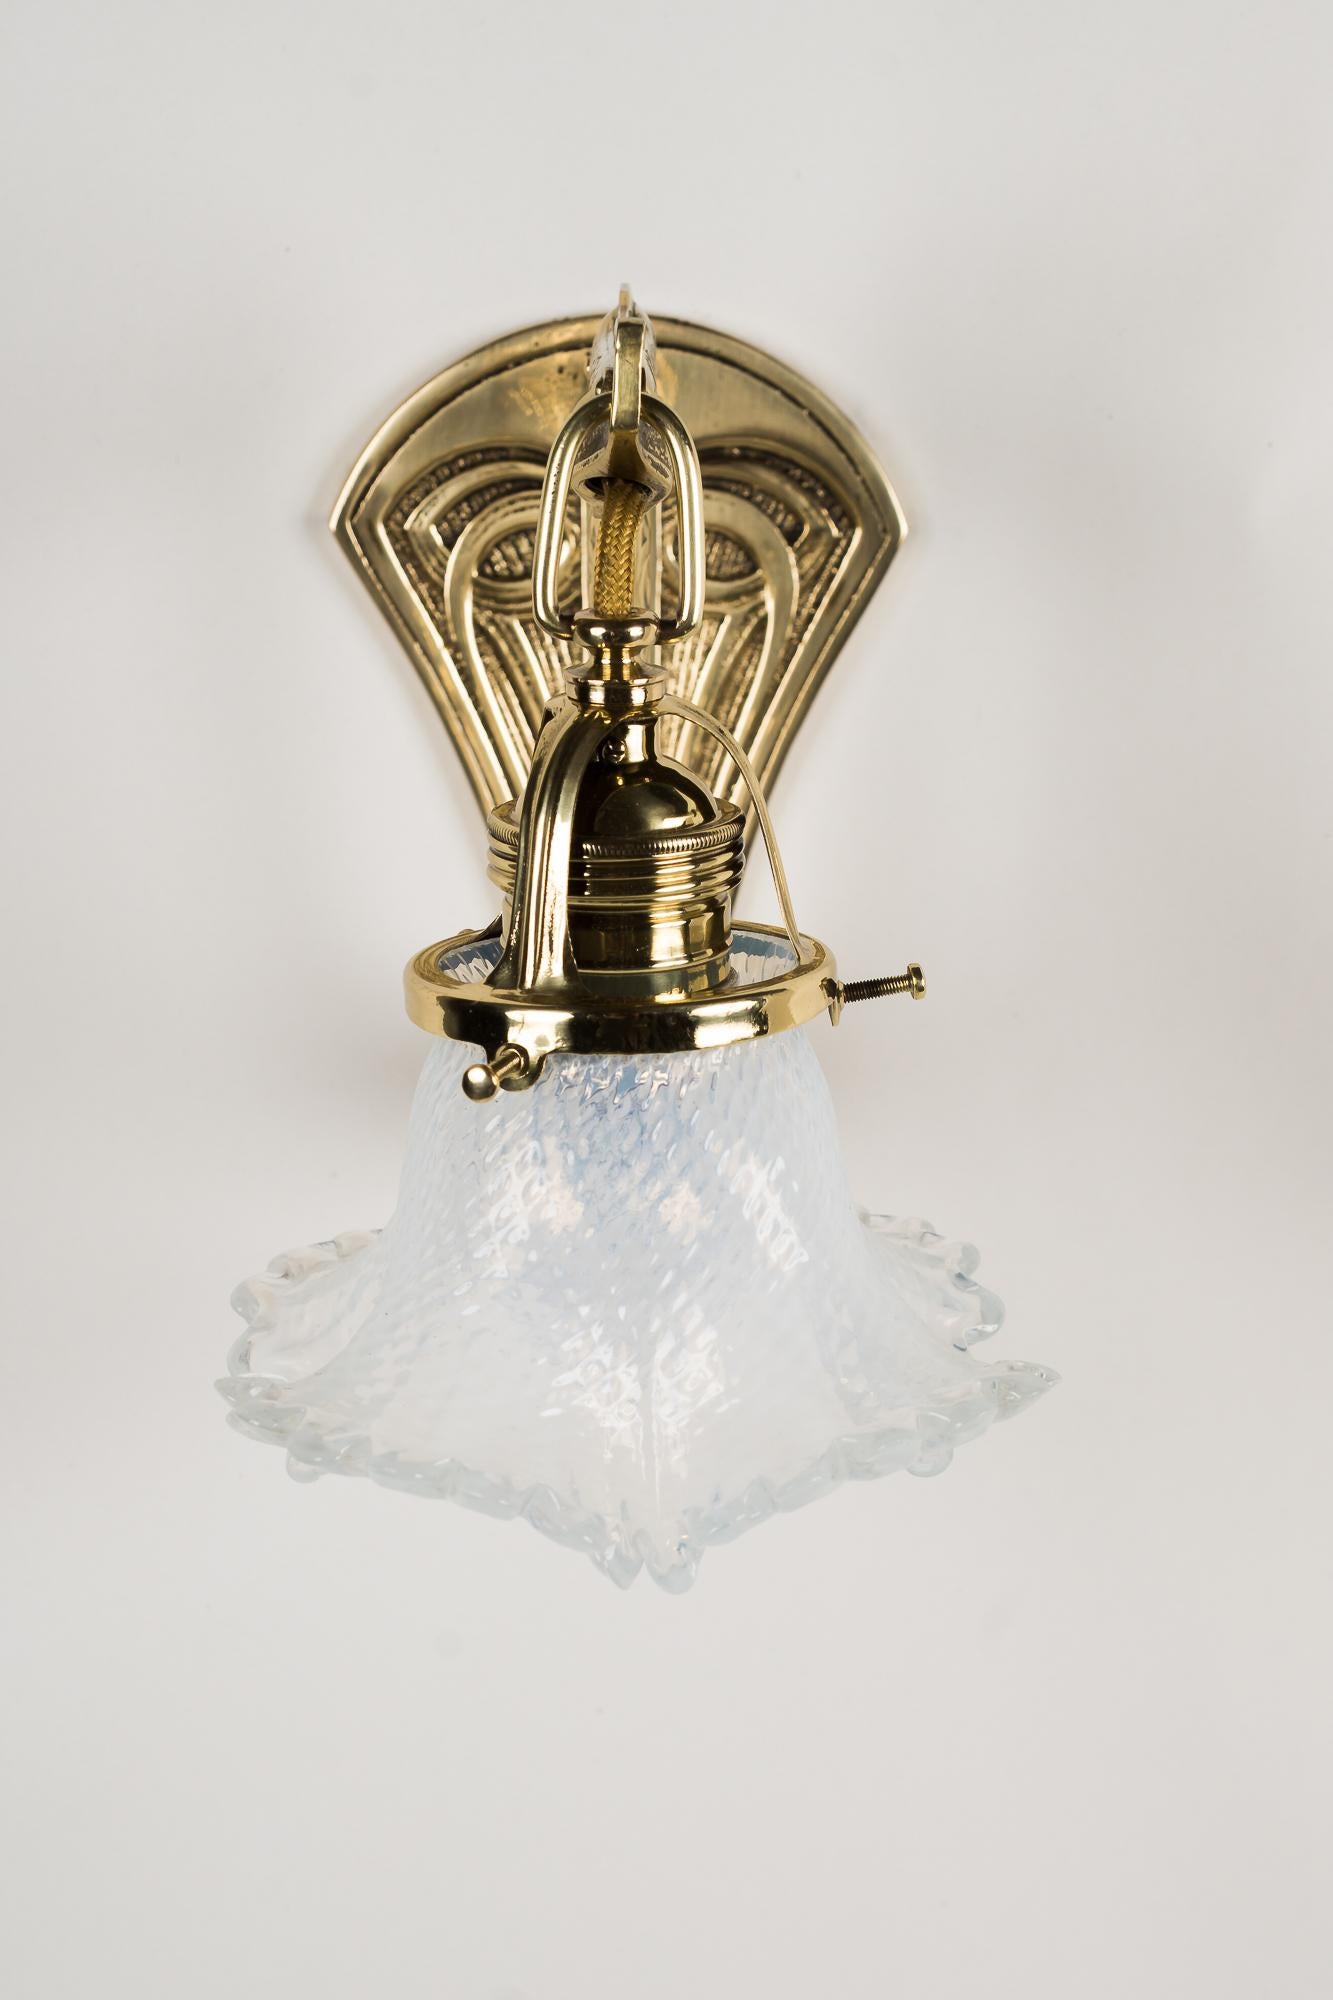 Austrian Art Deco Wall Lamp with Original Opaline Glass Shade around 1920s